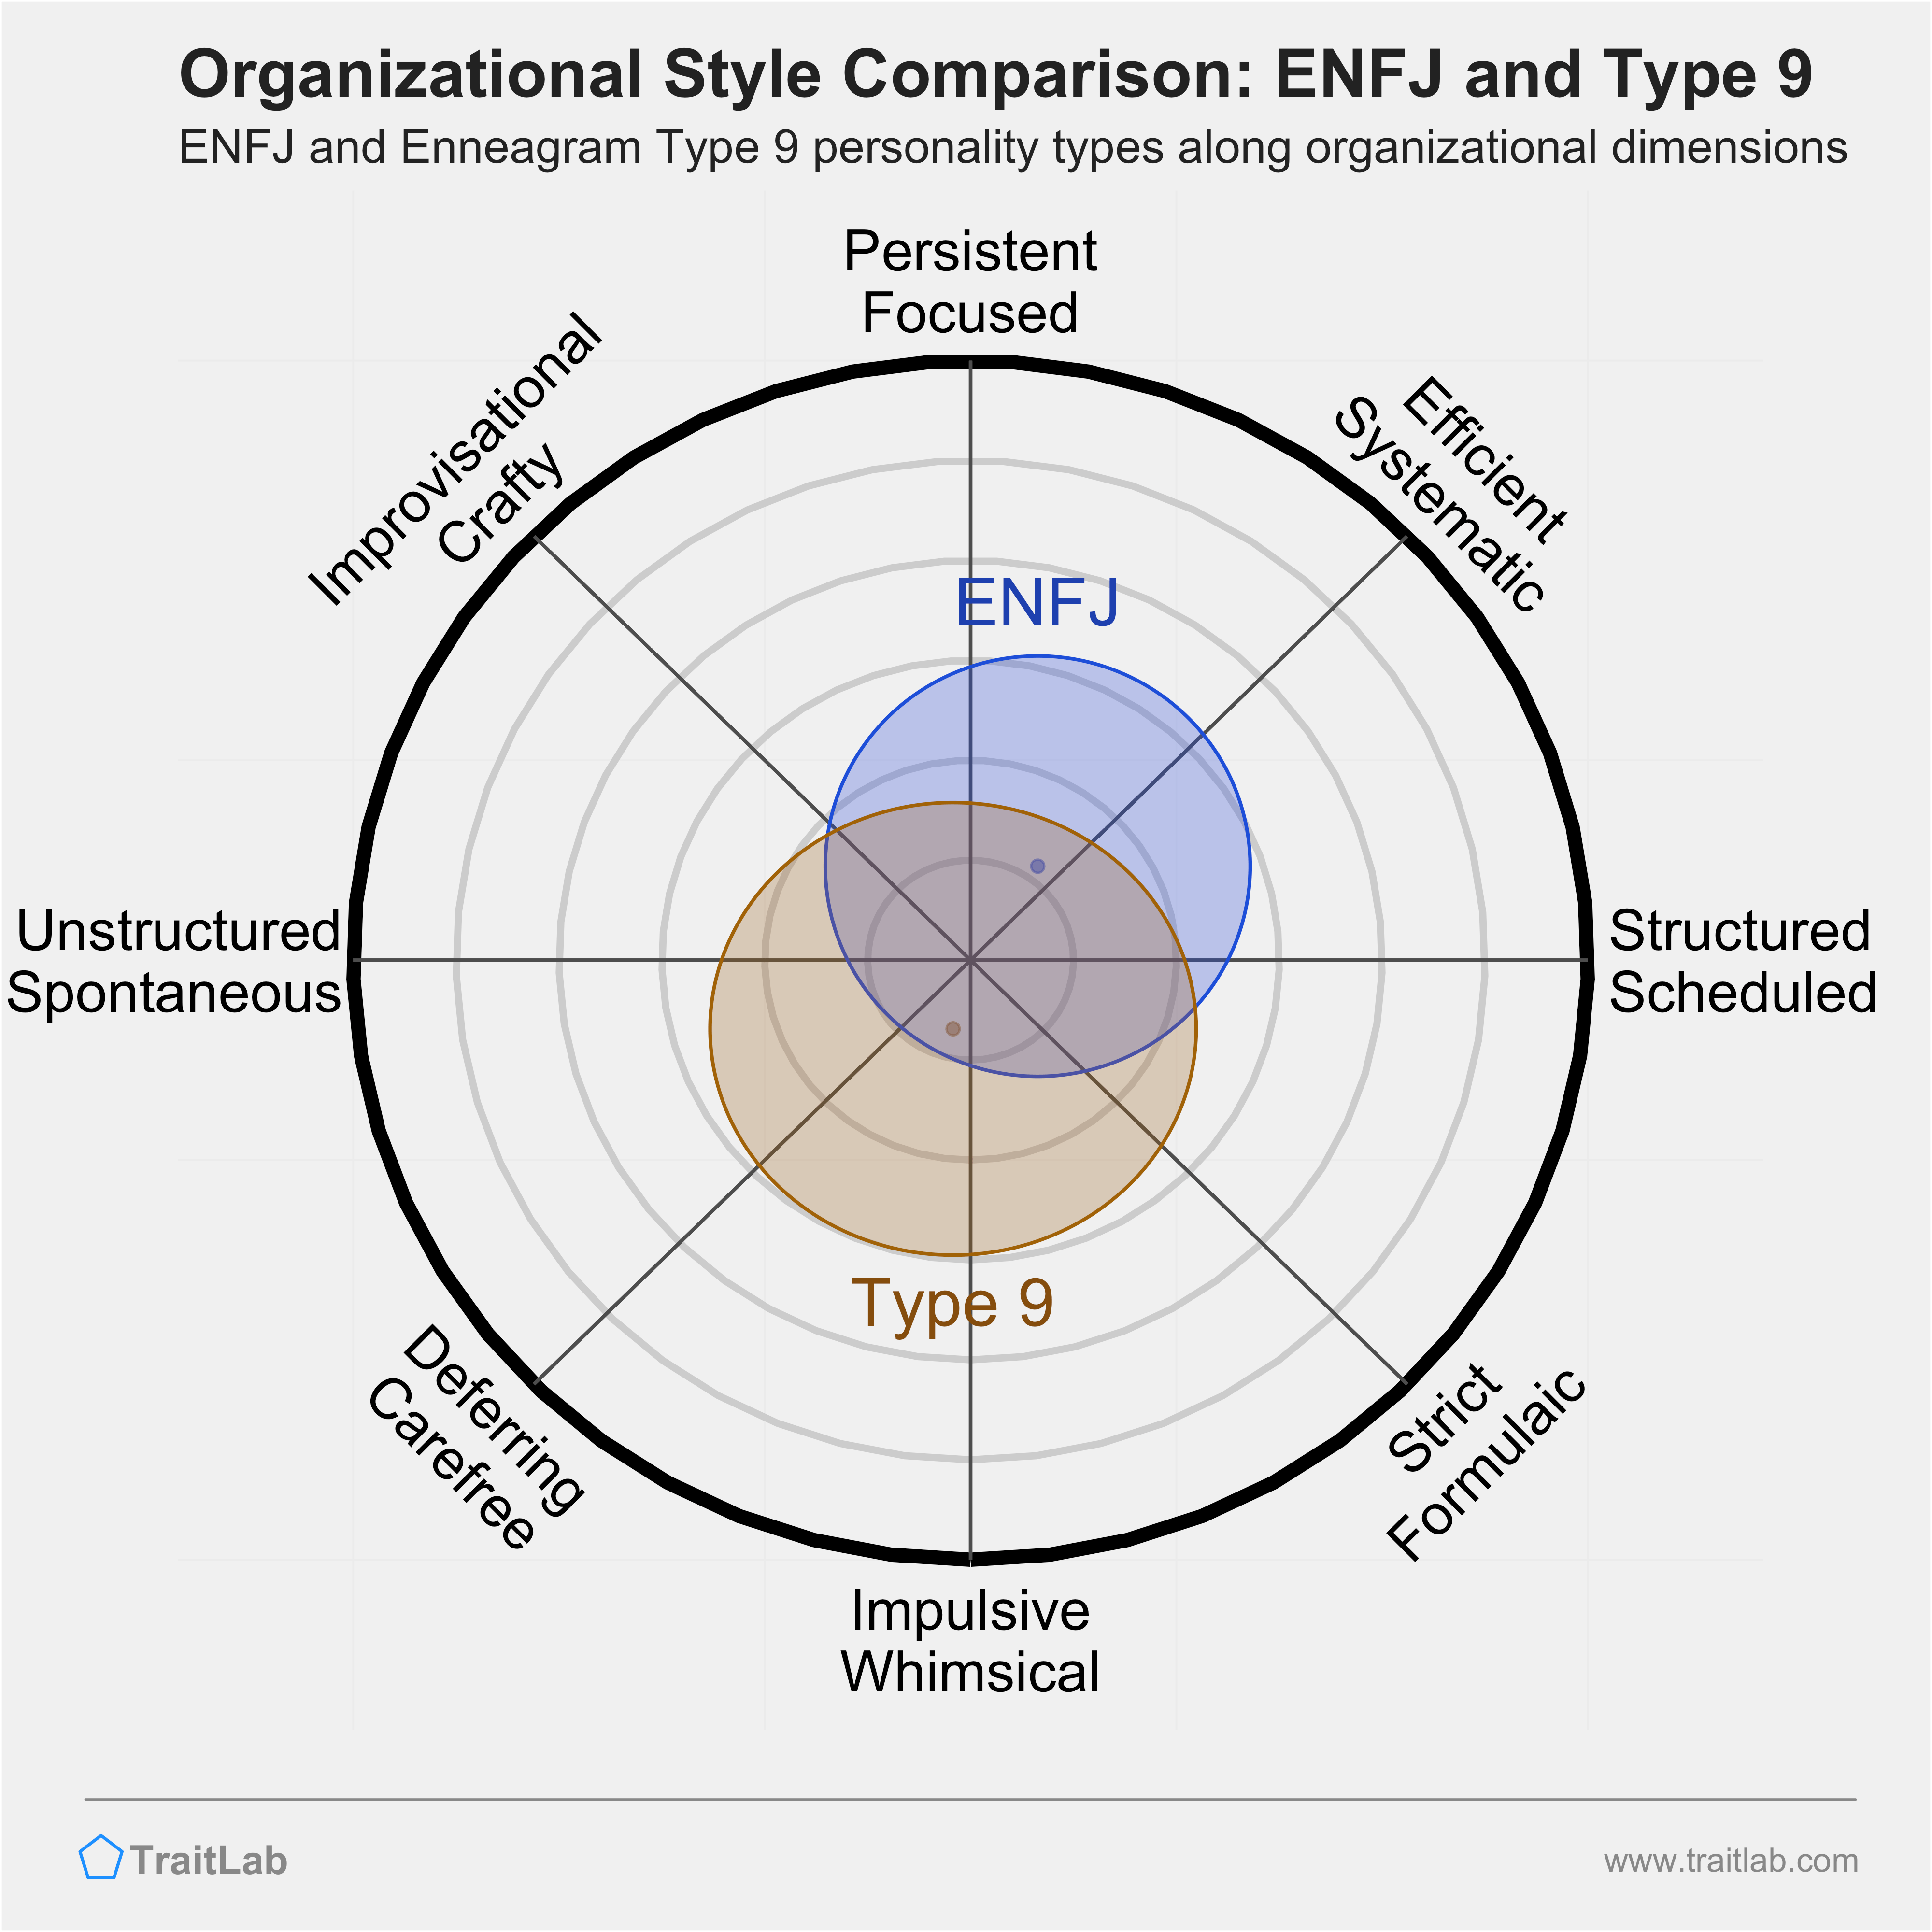 ENFJ and Type 9 comparison across organizational dimensions